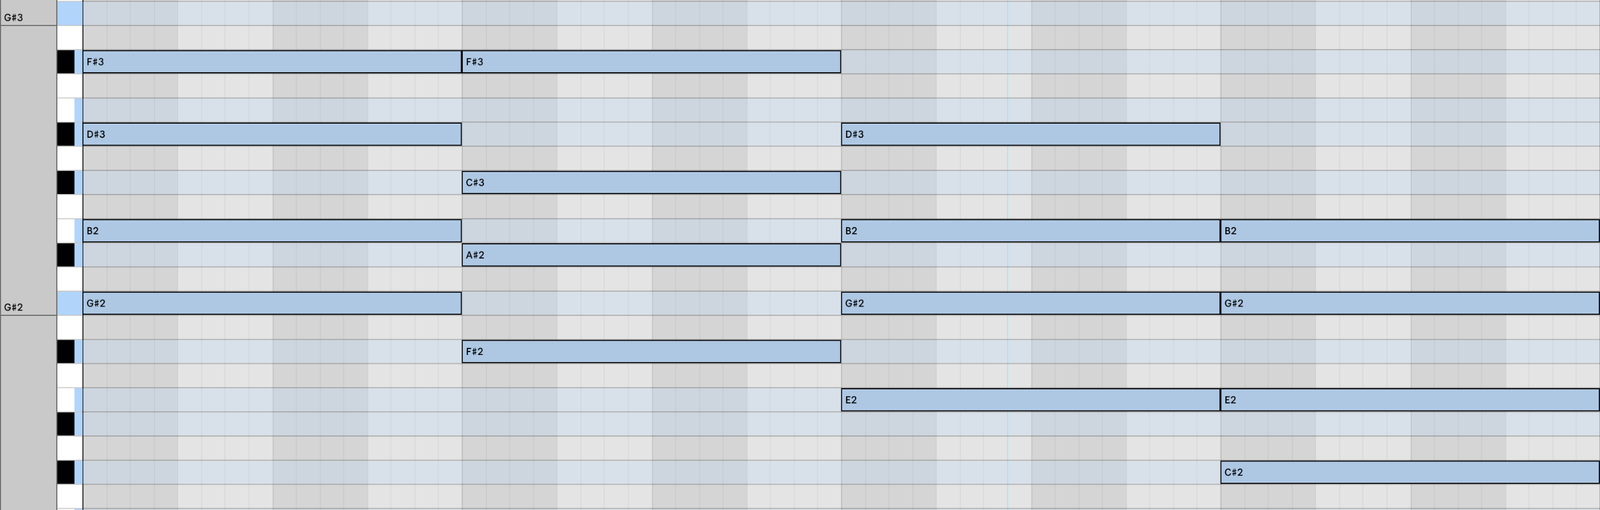 chord progression (i7 VII VI7 iv)